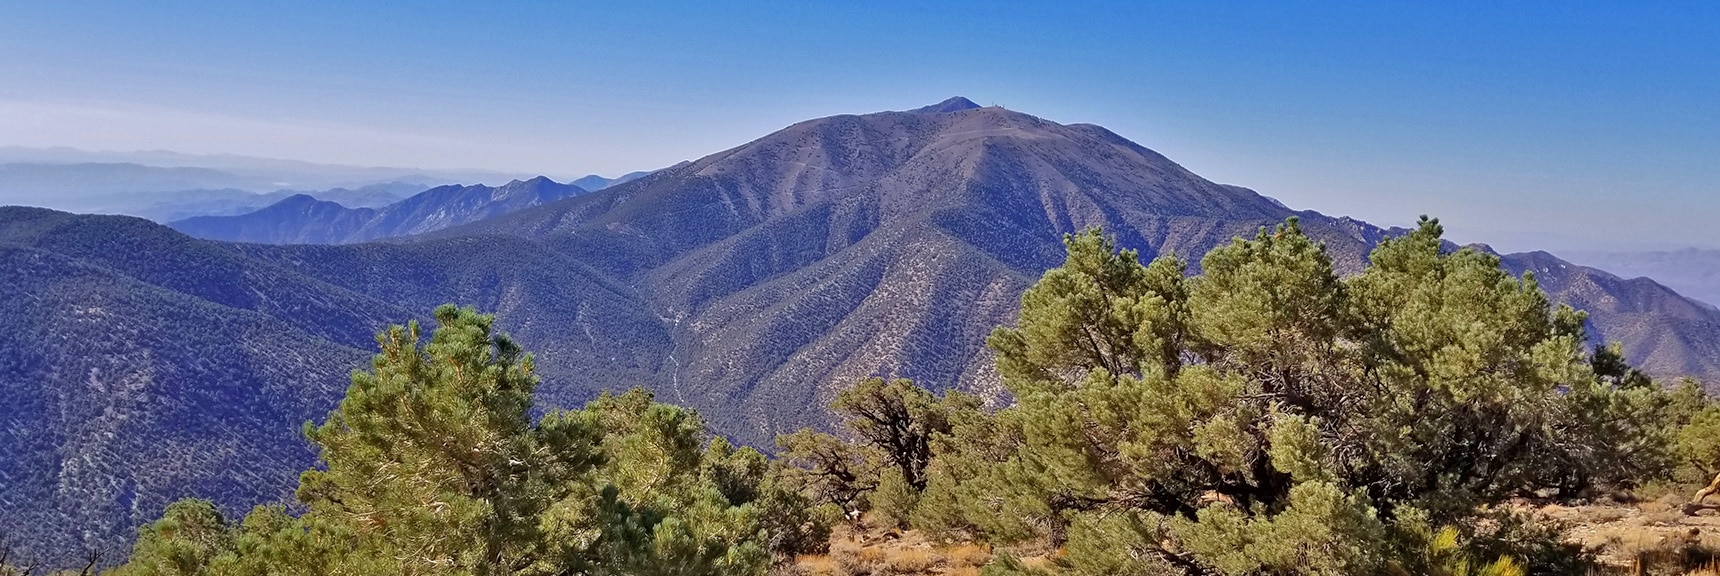 Telescope Peak, Bennett Peak and Rogers Peak from Near Wildrose Peak Summit | Wildrose Peak | Panamint Mountain Range | Death Valley National Park, California